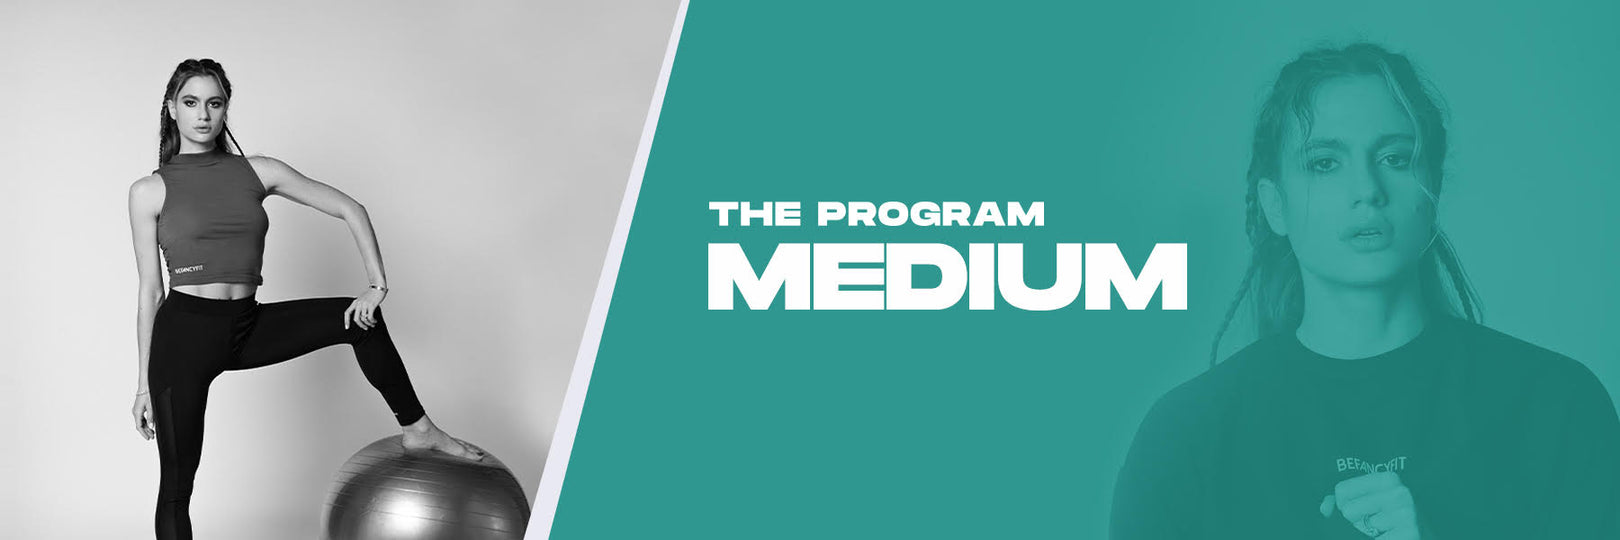 The Program Medium - Cristina Marino